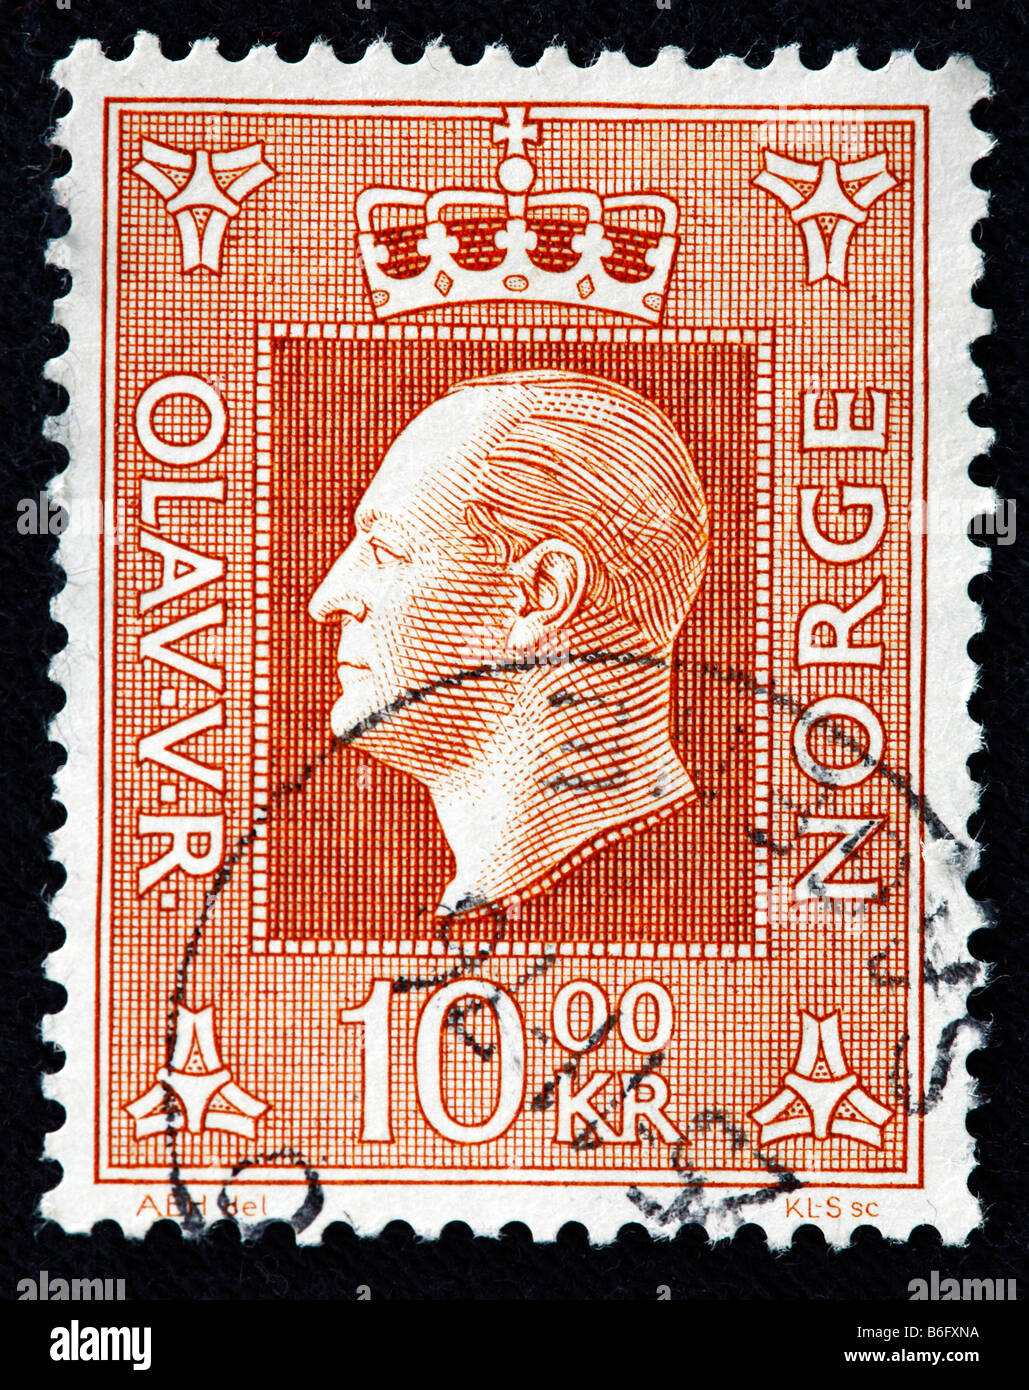 Olav V, King of Norway (1957-1991), postage stamp, Norway Stock Photo